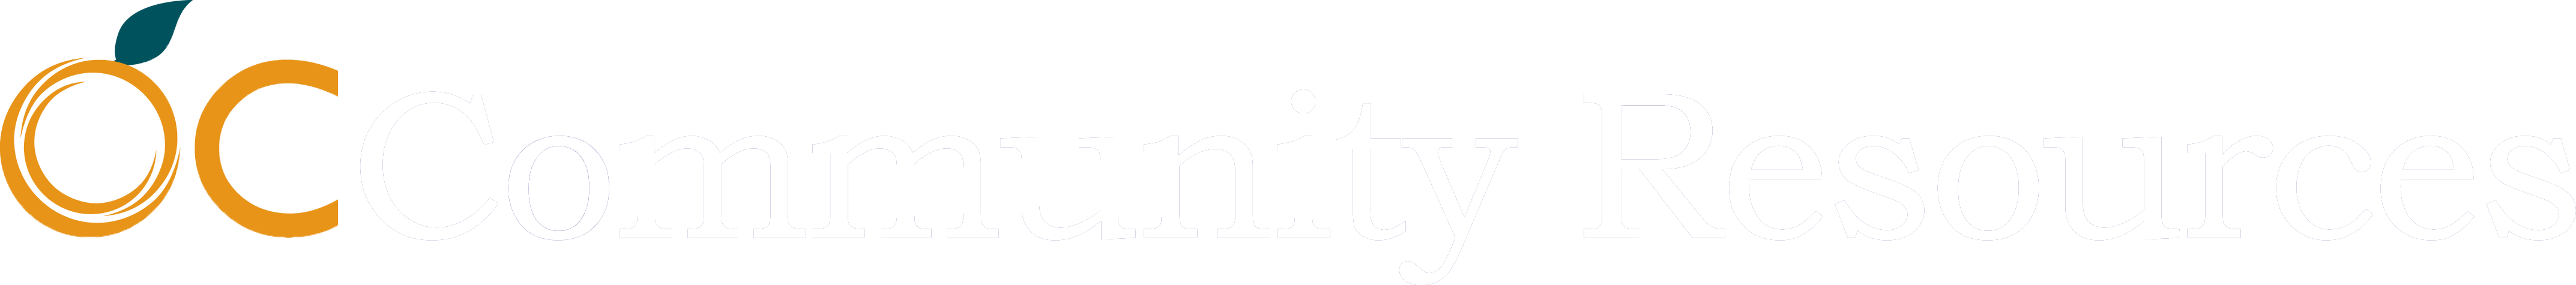 Orange County Community Resources logo